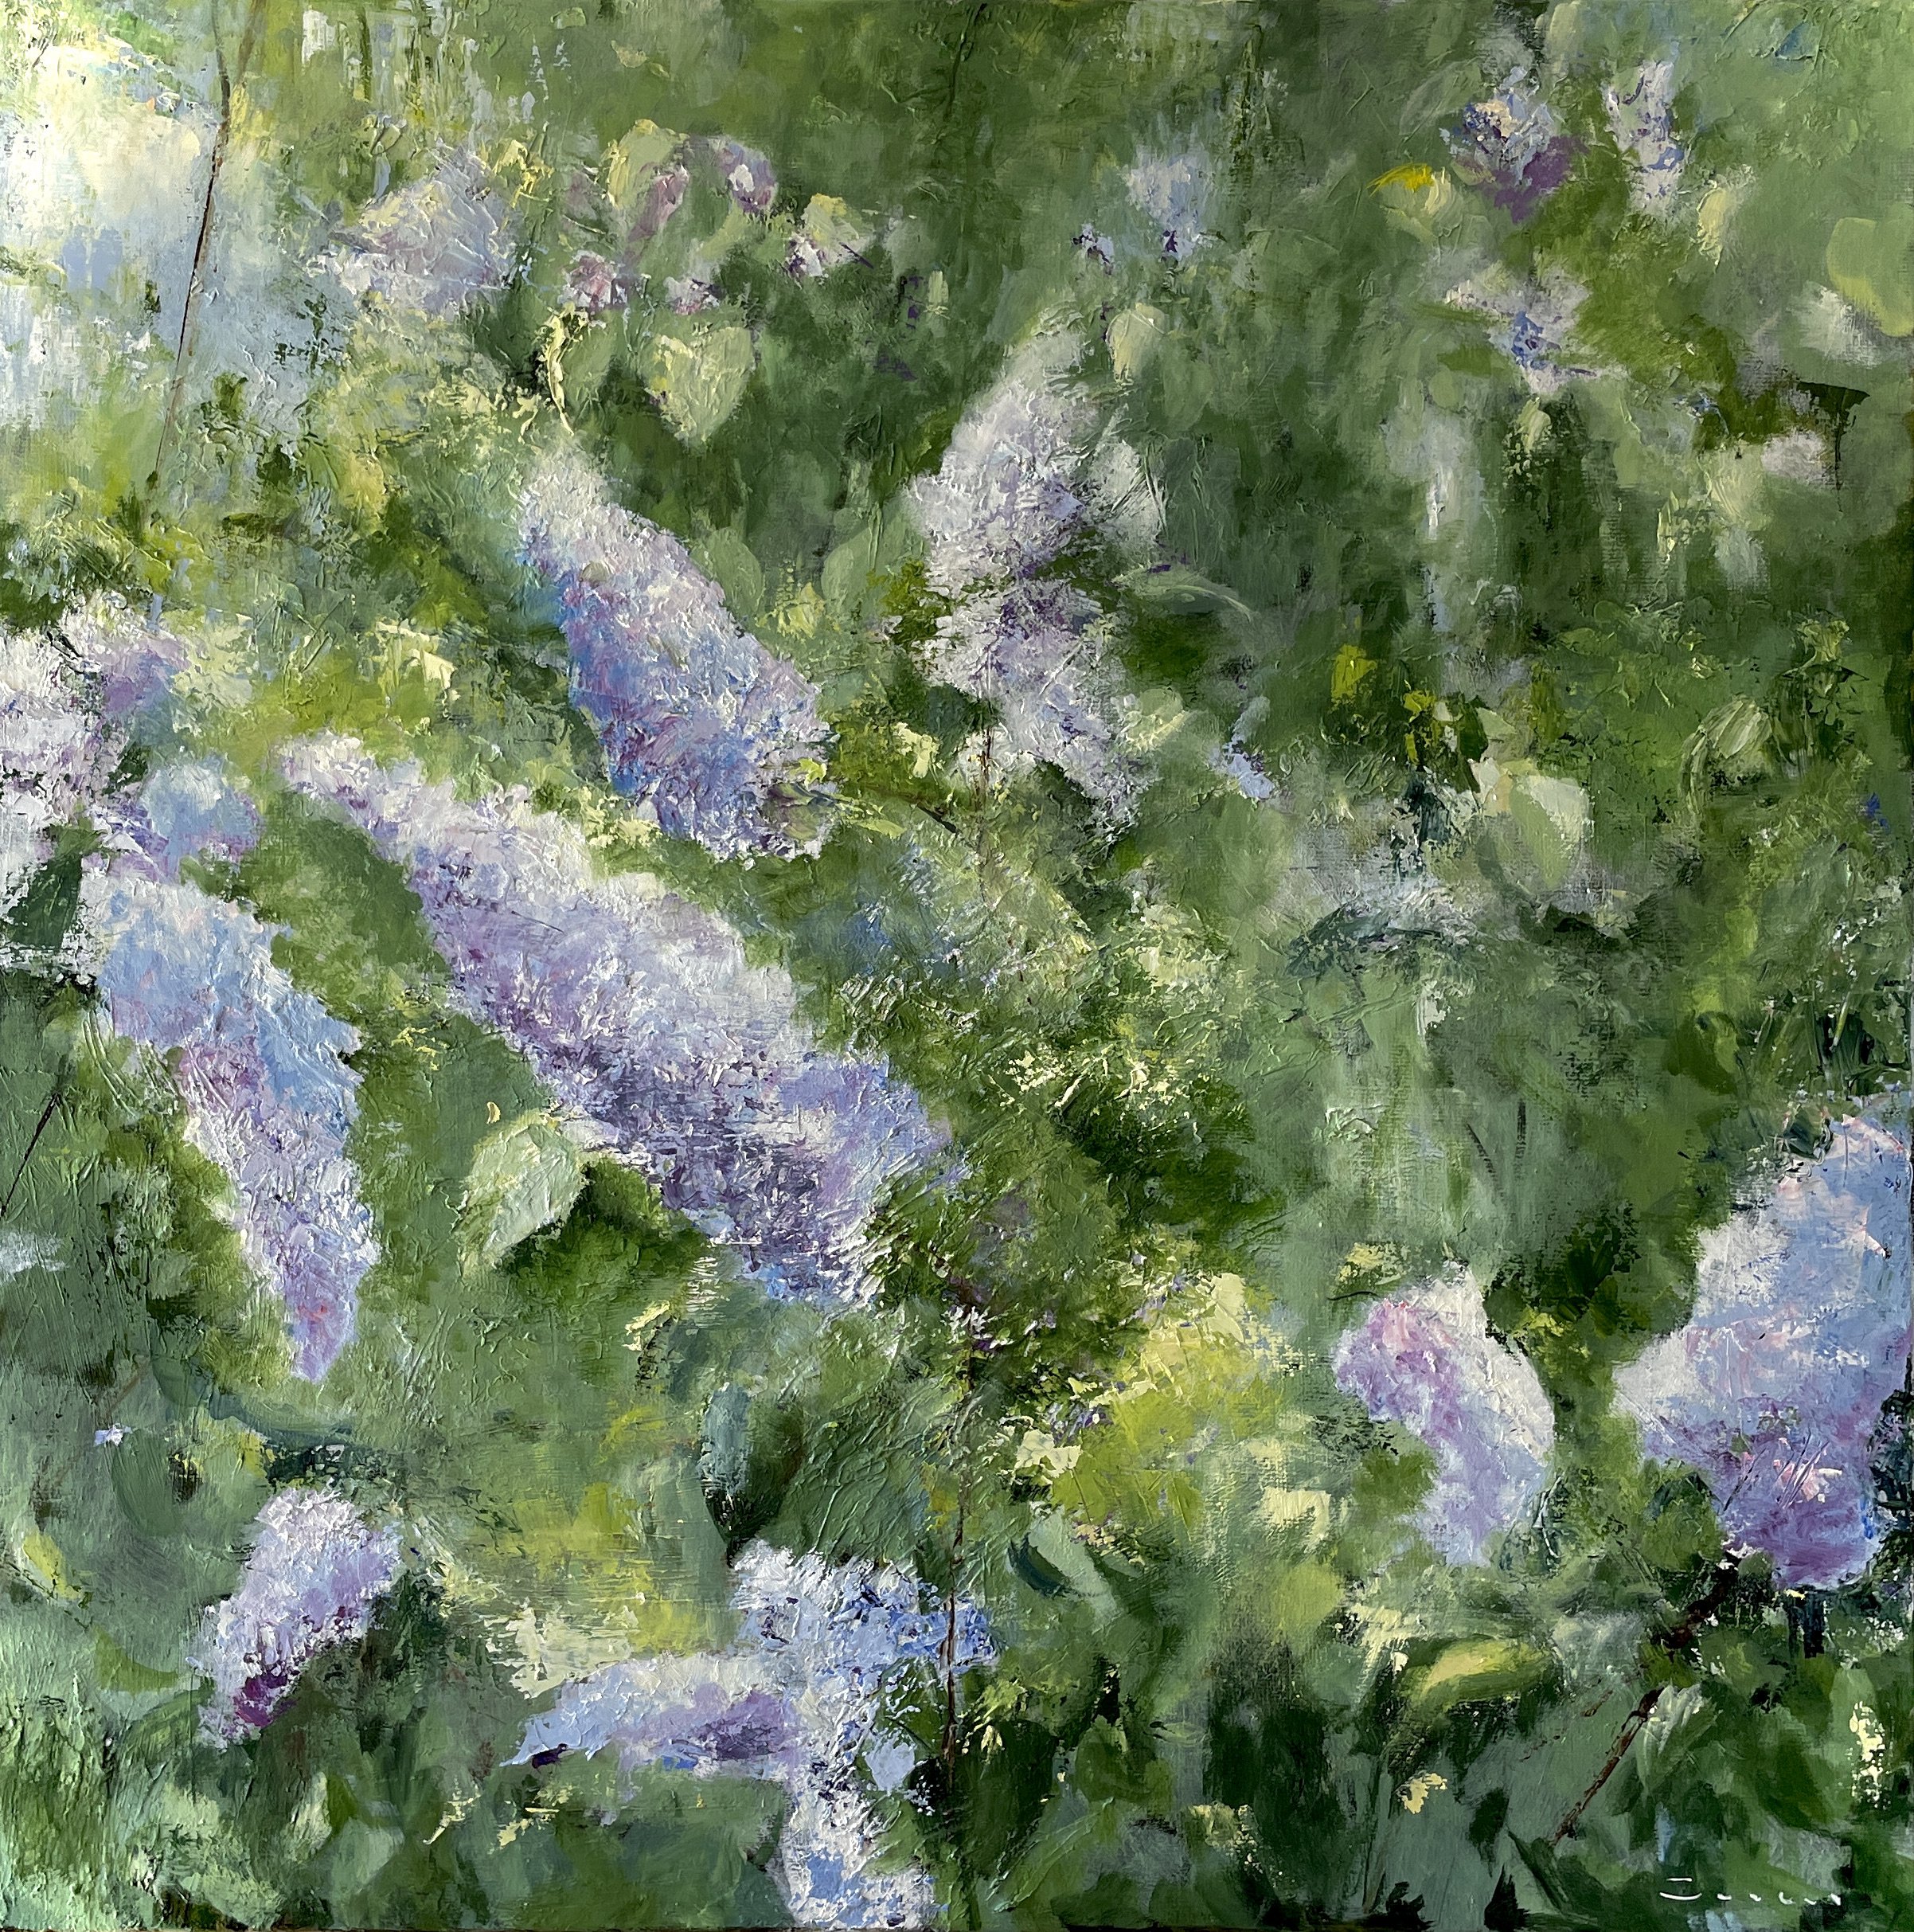 Lilacs poetry